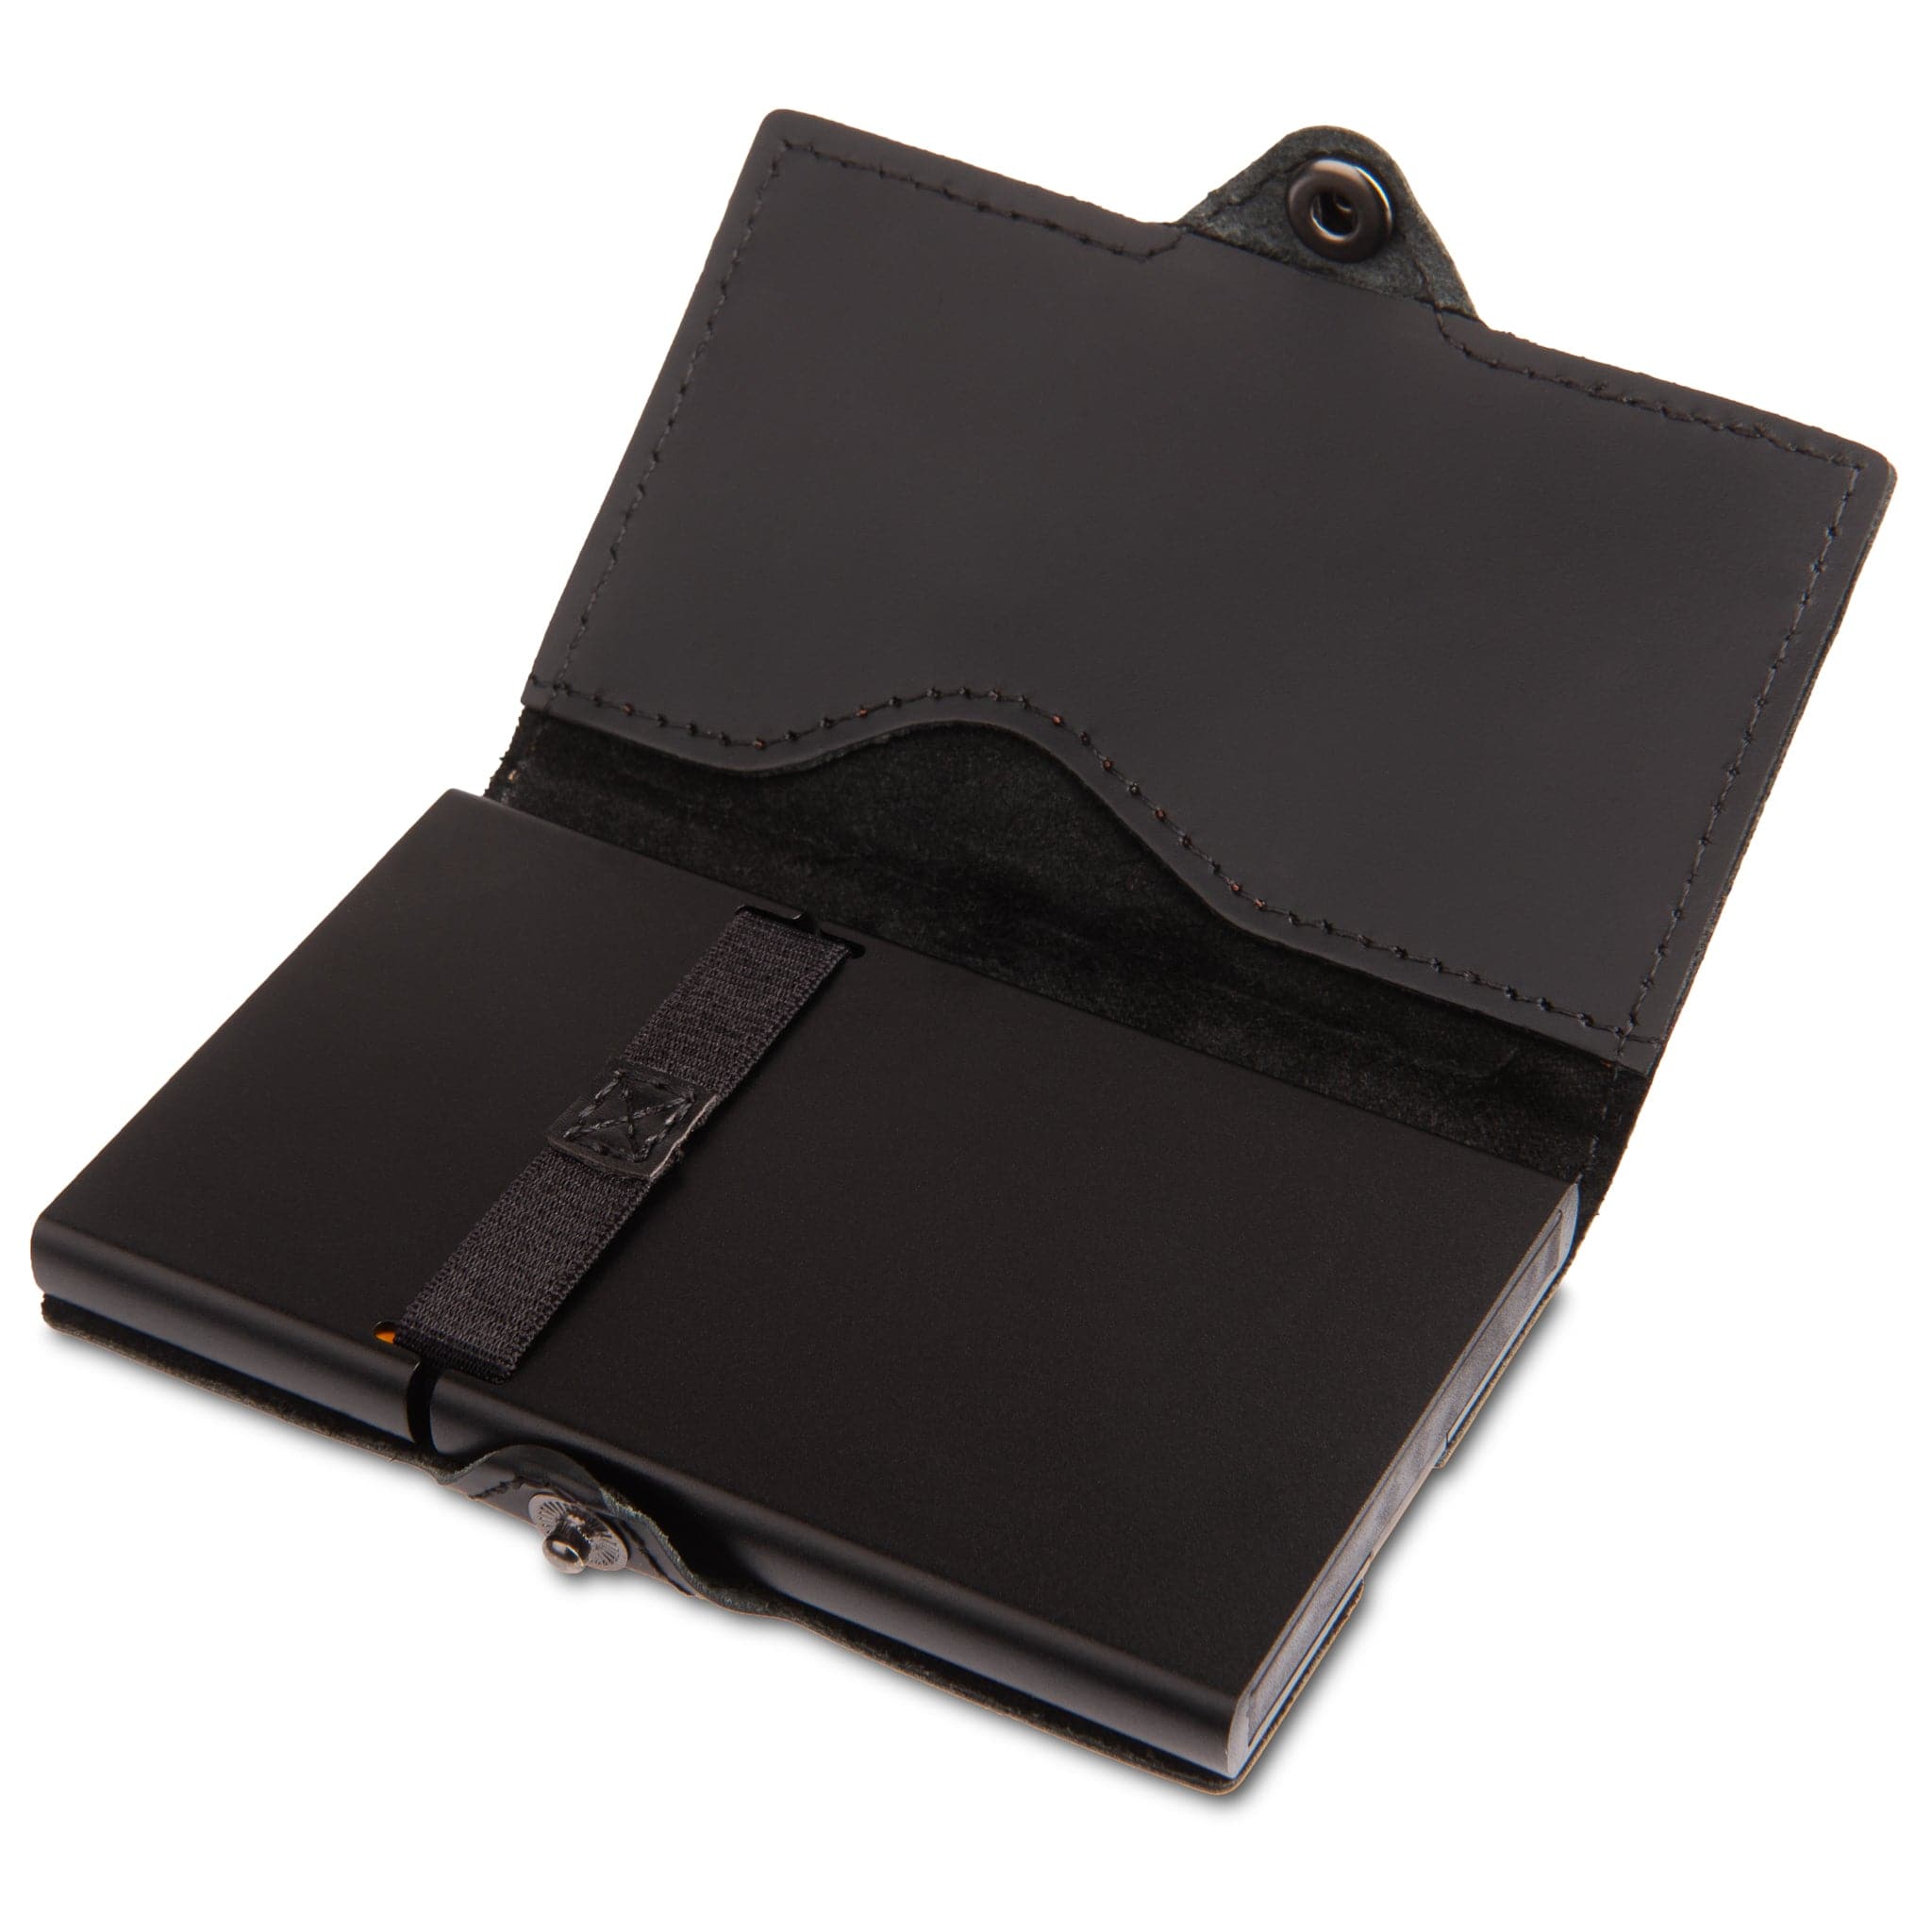 inside of cardinal black leather wallet